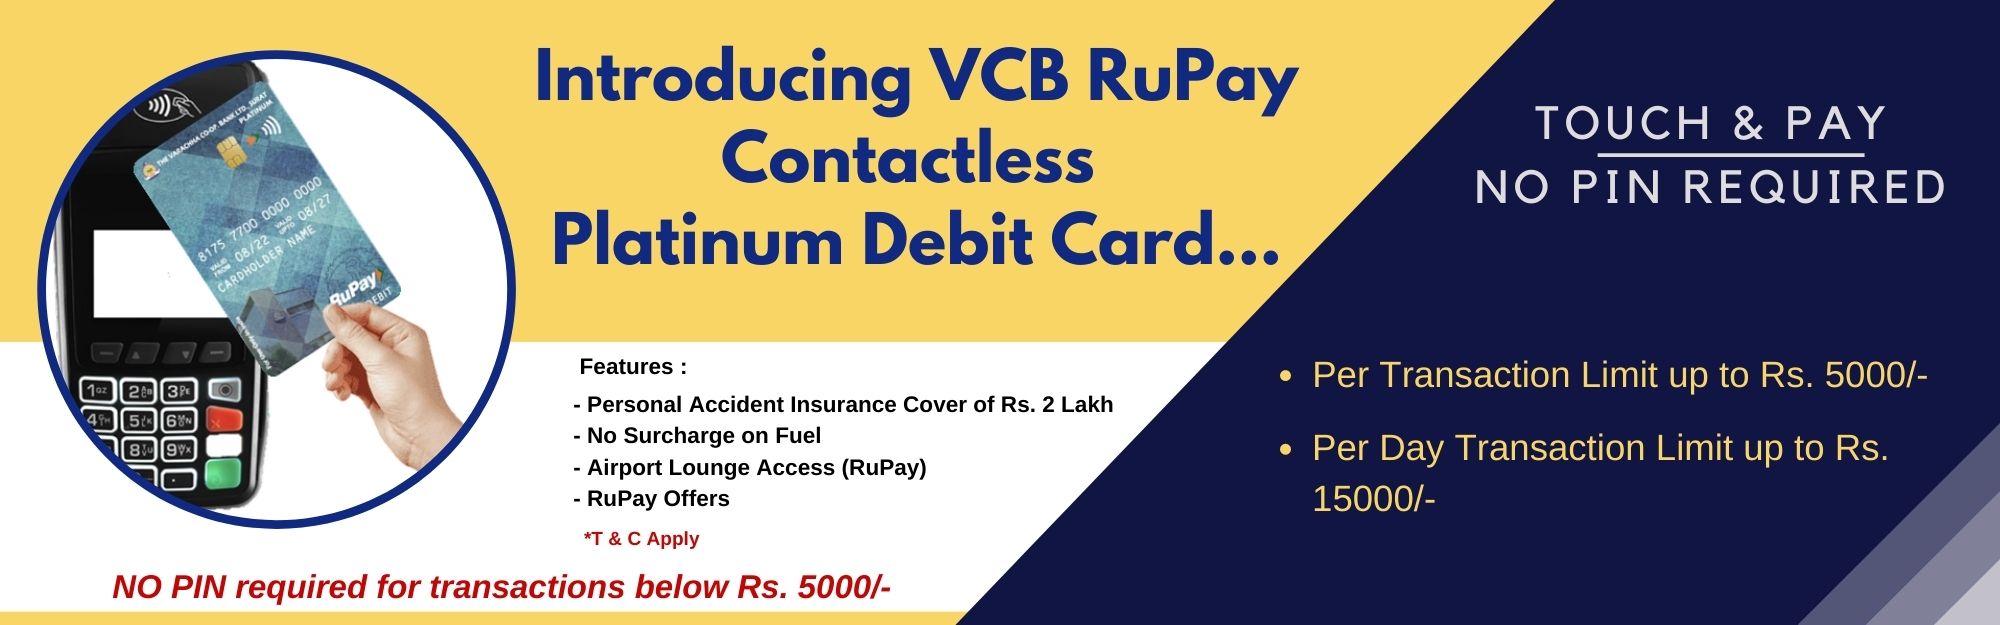 RuPay Contactless Platinum Debit Card